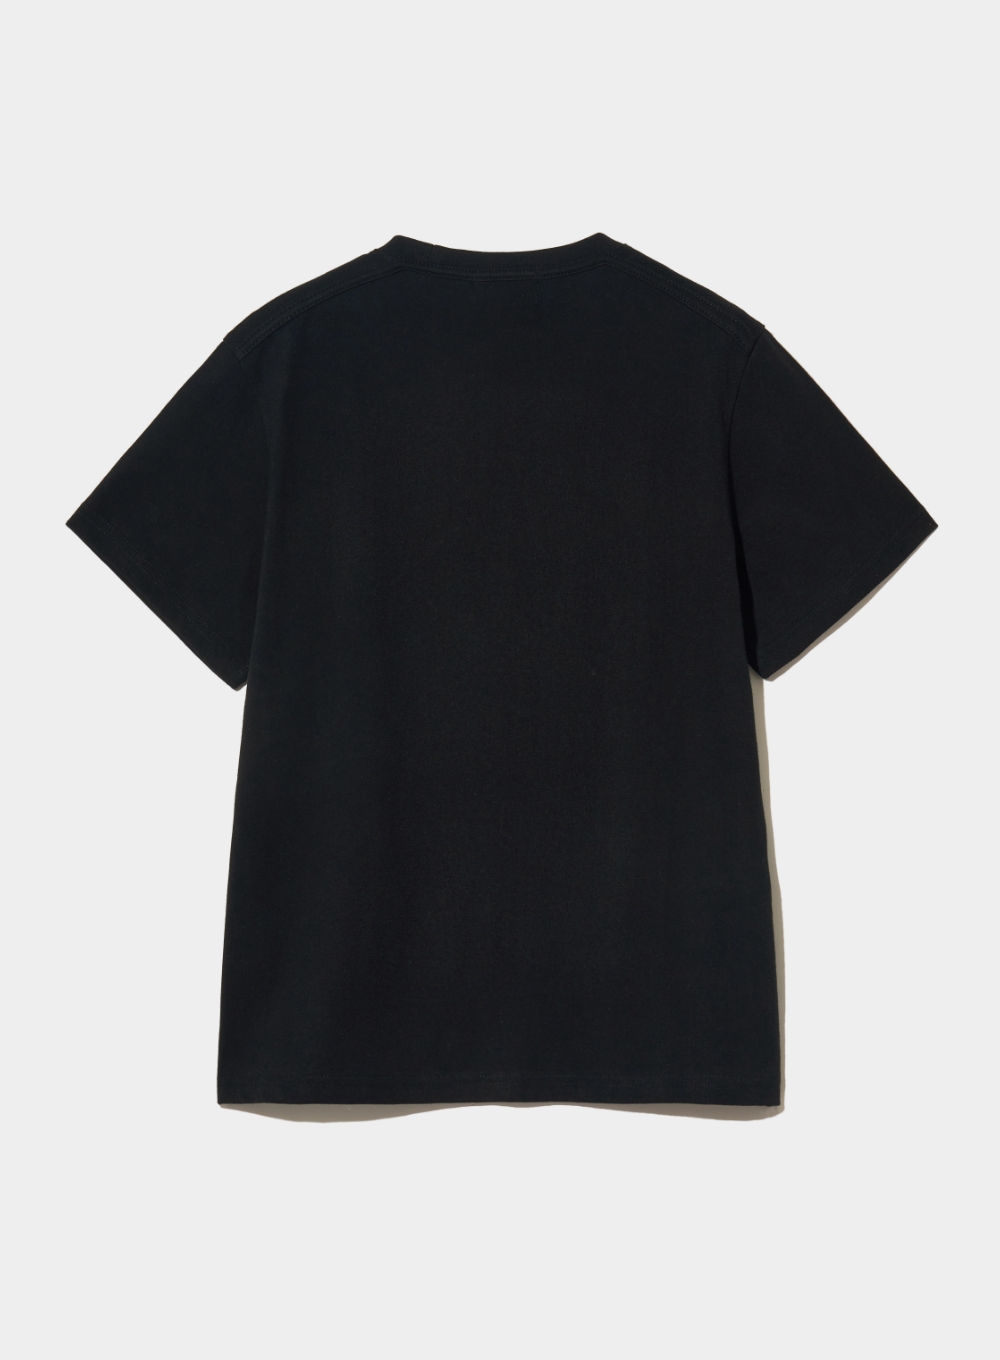 (W) Paris Metro Graphic T-Shirt - Resort Black